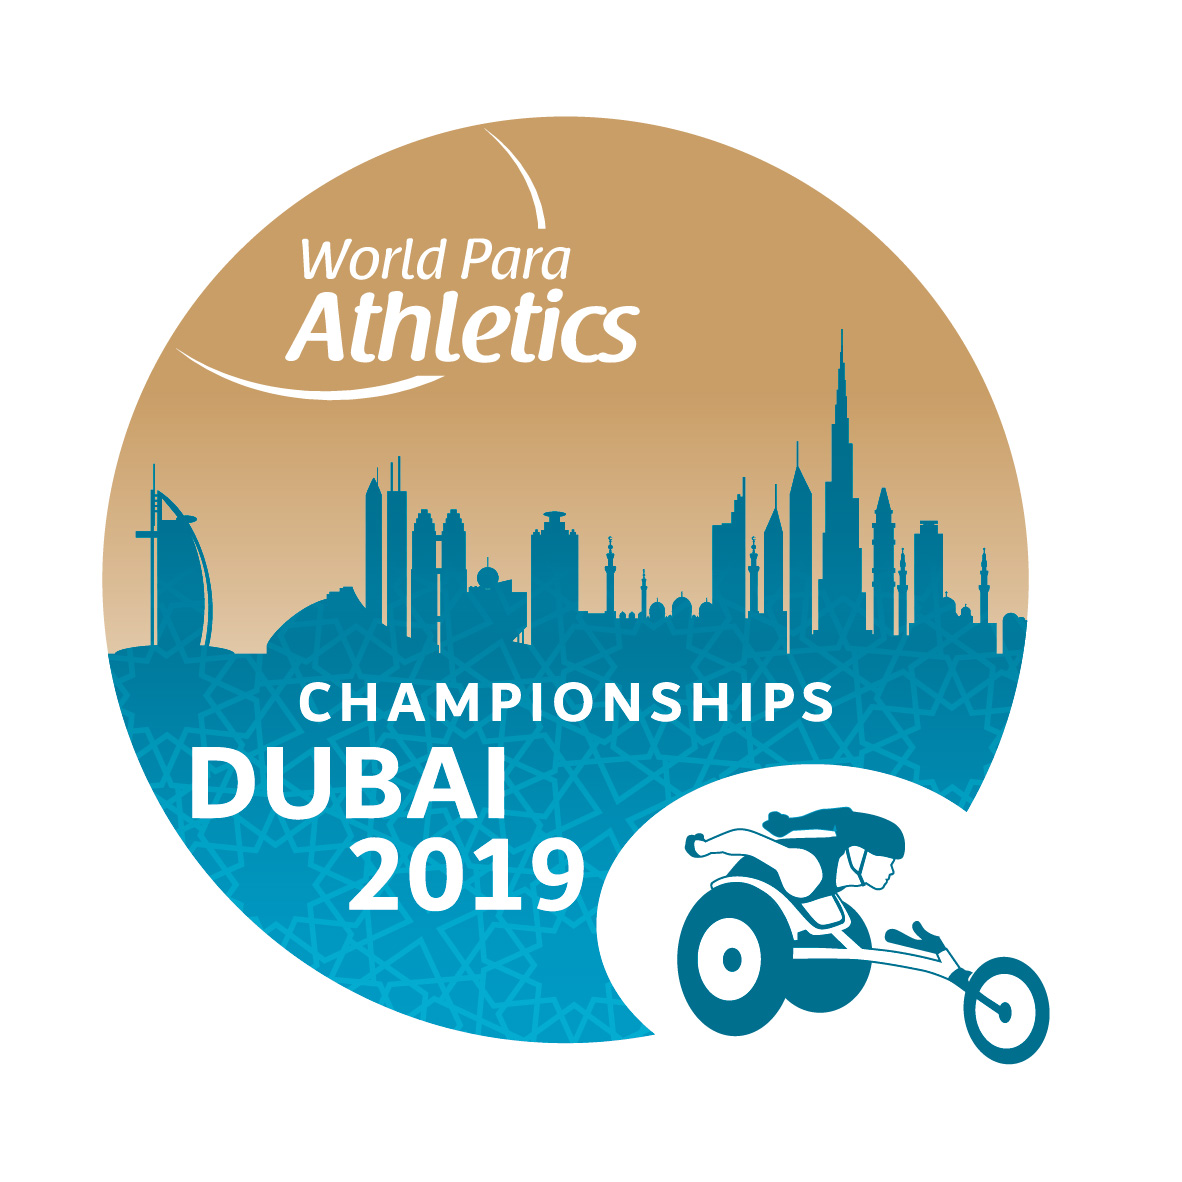 Dubai 2019 World Para Athletics Championships